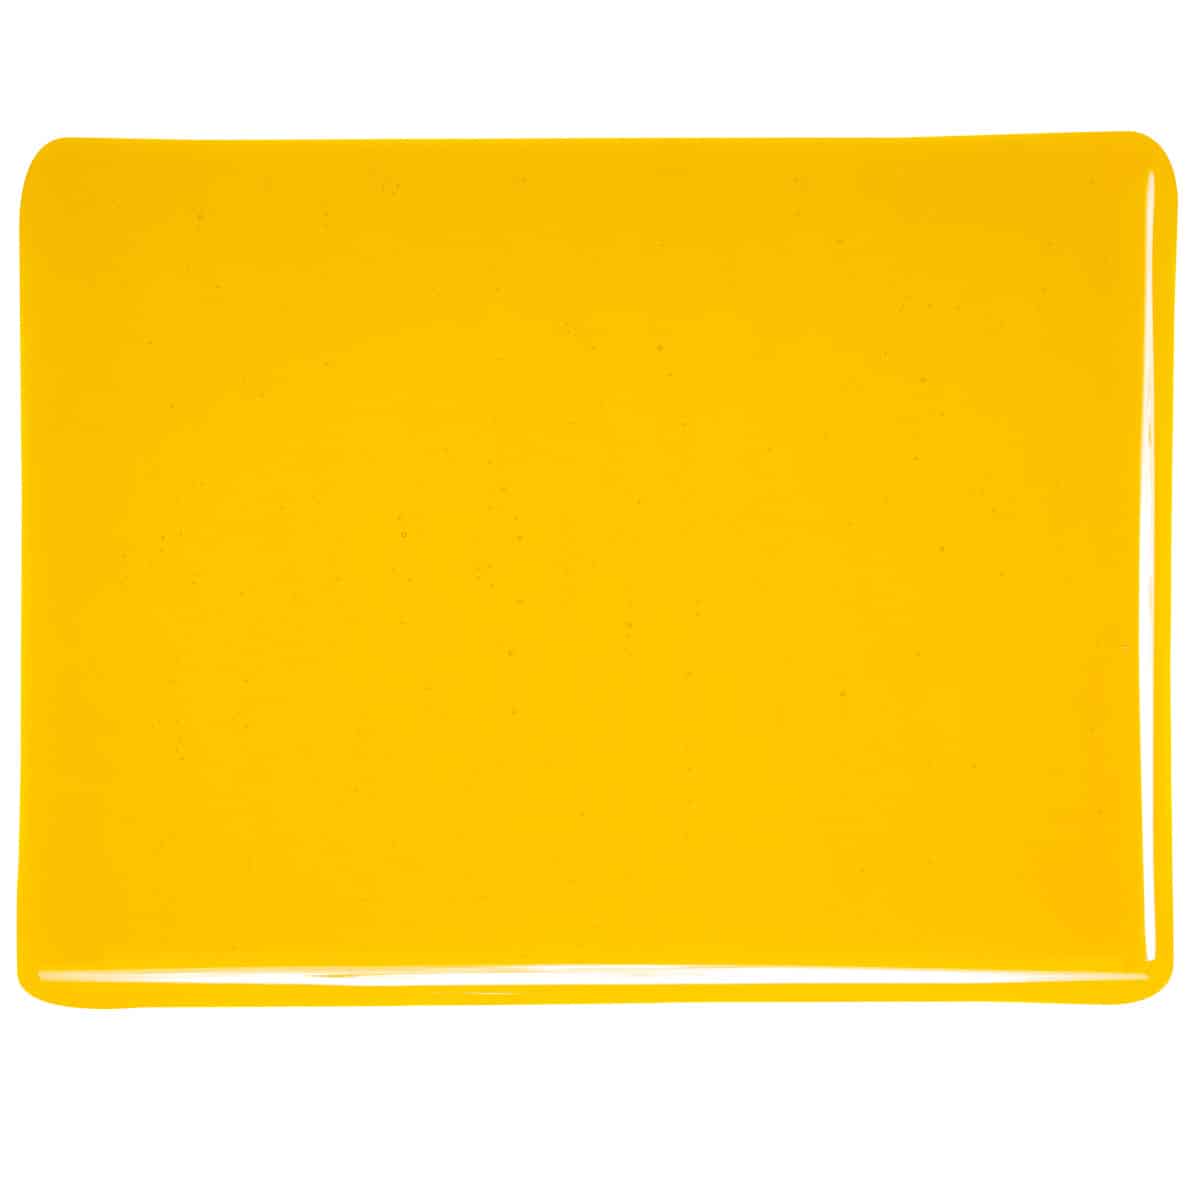 001320 Transparent Marigold Yellow sheet glass swatch